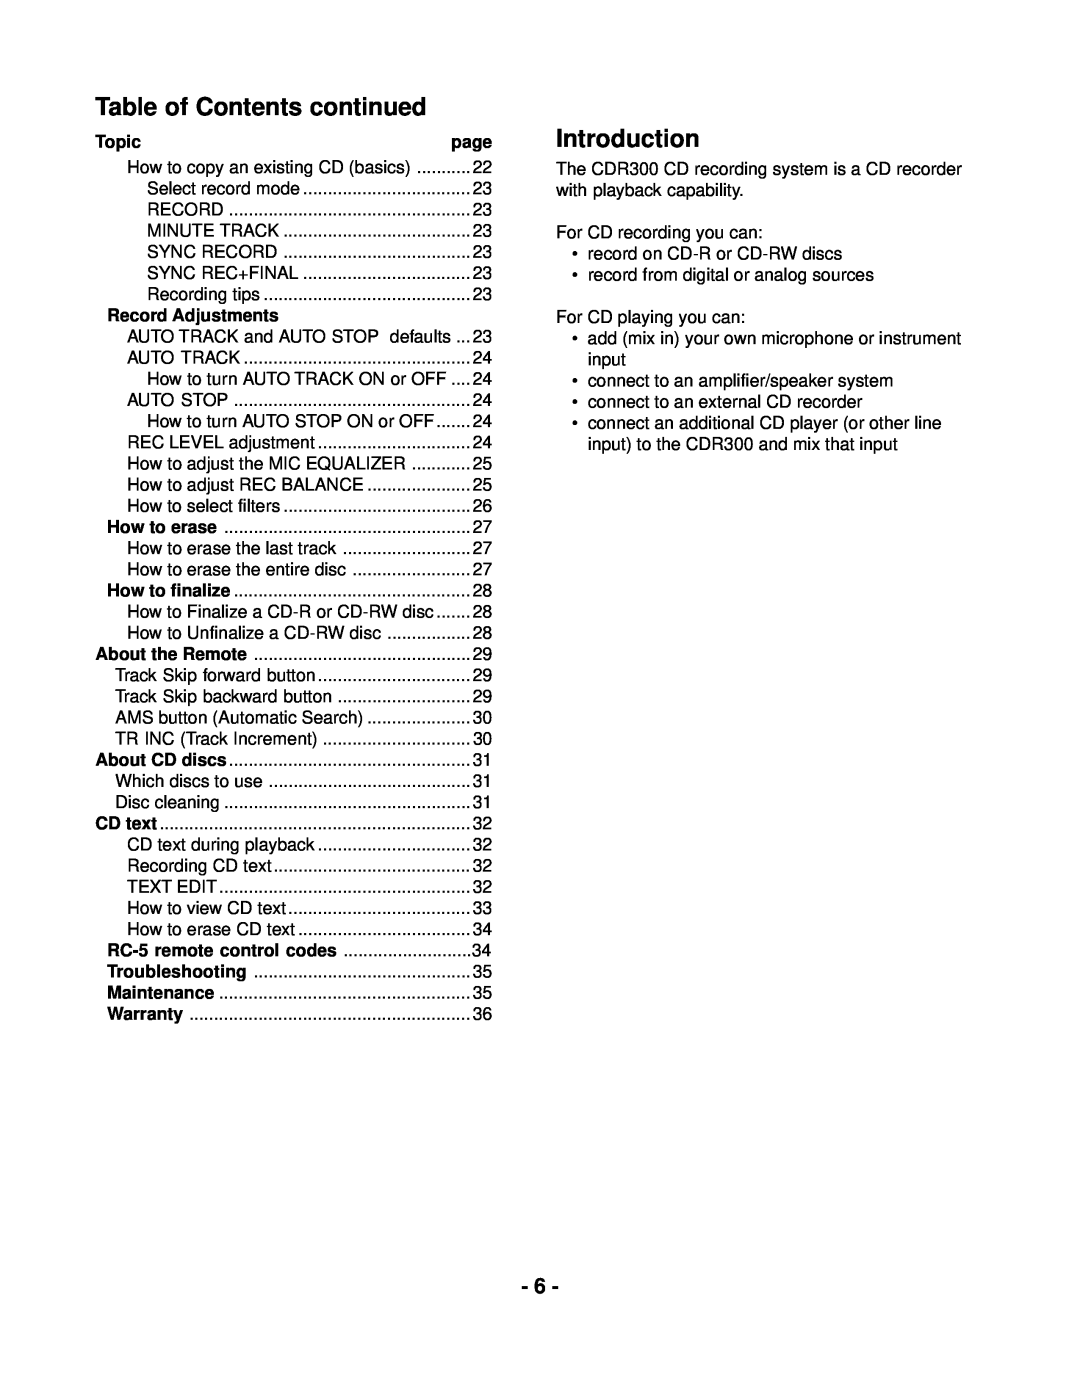 Marantz CDR300 manual Table of Contents continued, Introduction, Topic, Record Adjustments 